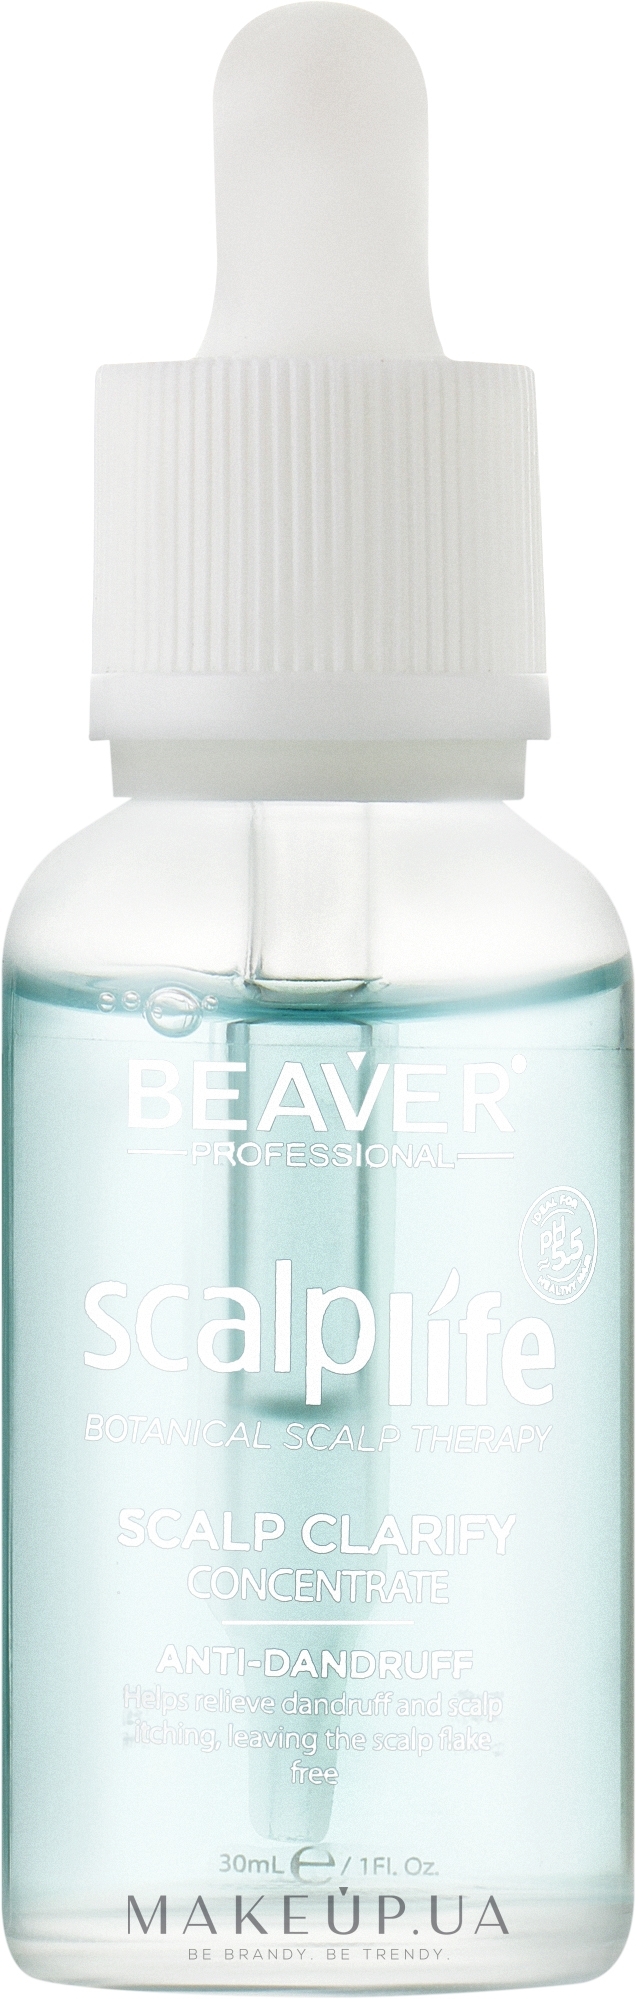 Лечебный лосьон против перхоти - Beaver Professional Anti-dandruff Scalp Clarify Concentrate — фото 30ml